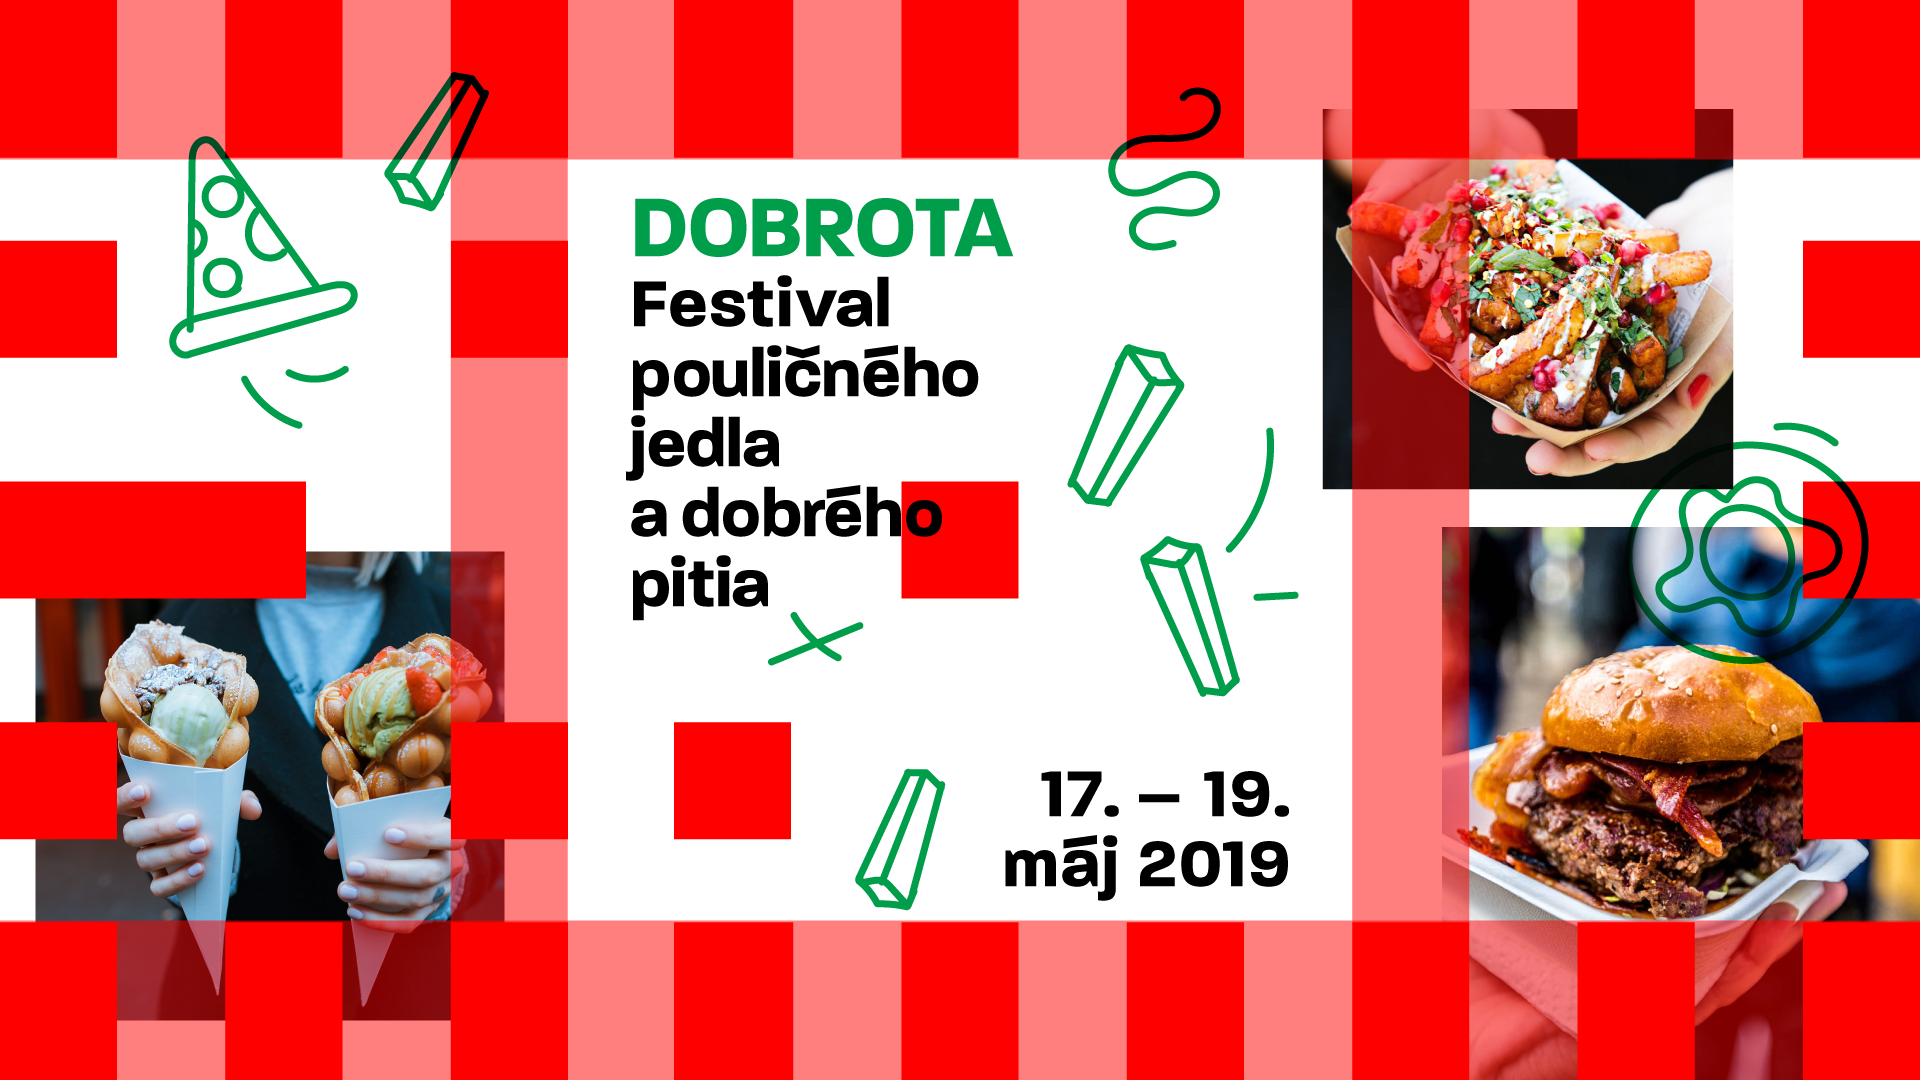 DOBROTA - Festival pouličného jedla a dobrého pitia